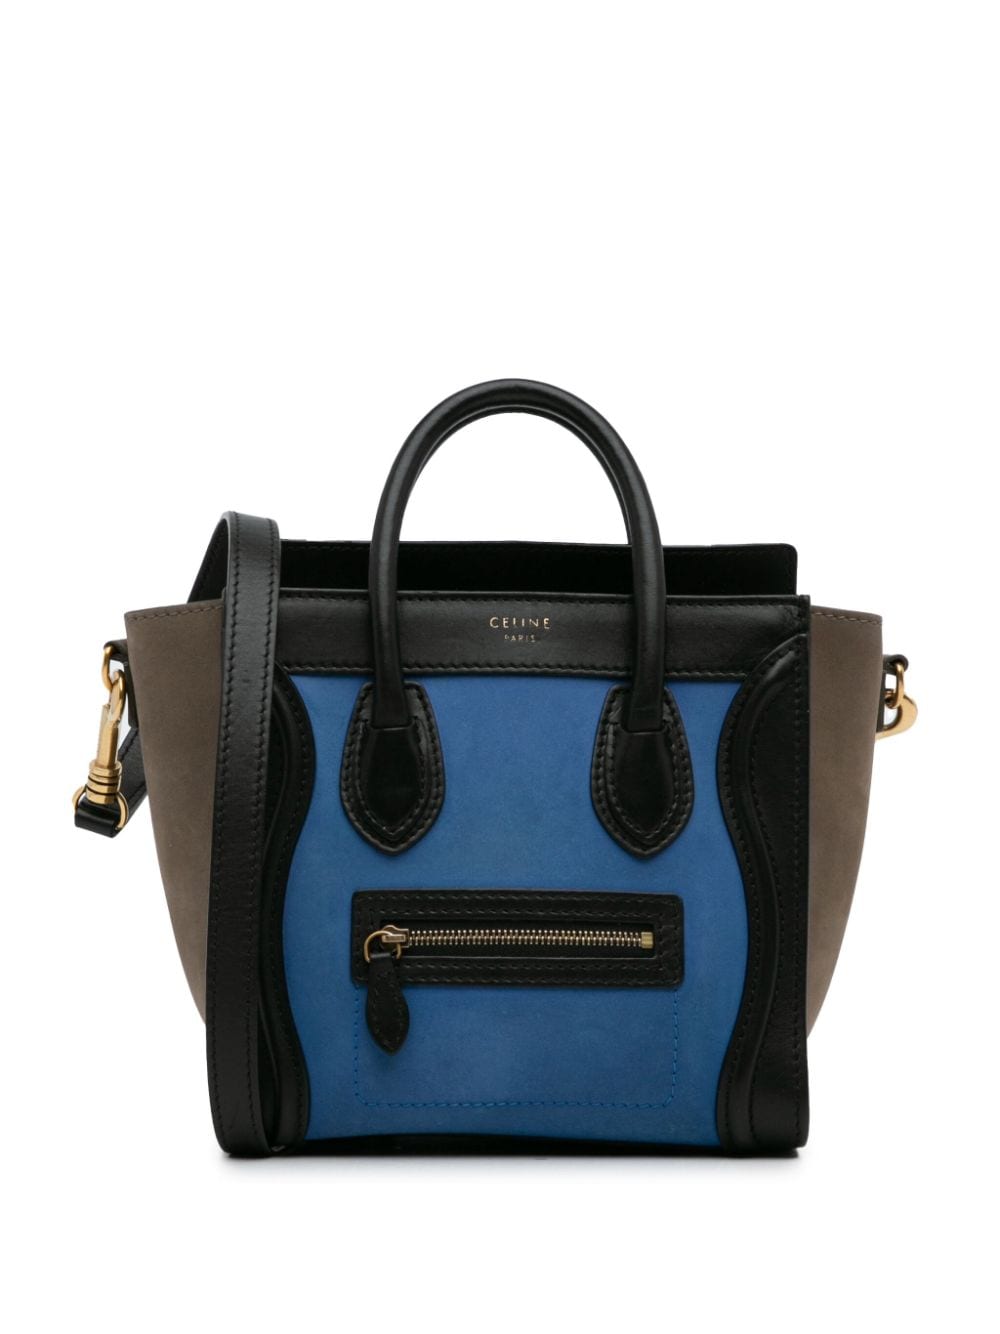 Céline Pre-Owned 2012 Nano Luggage Tote Tricolor satchel - Blu